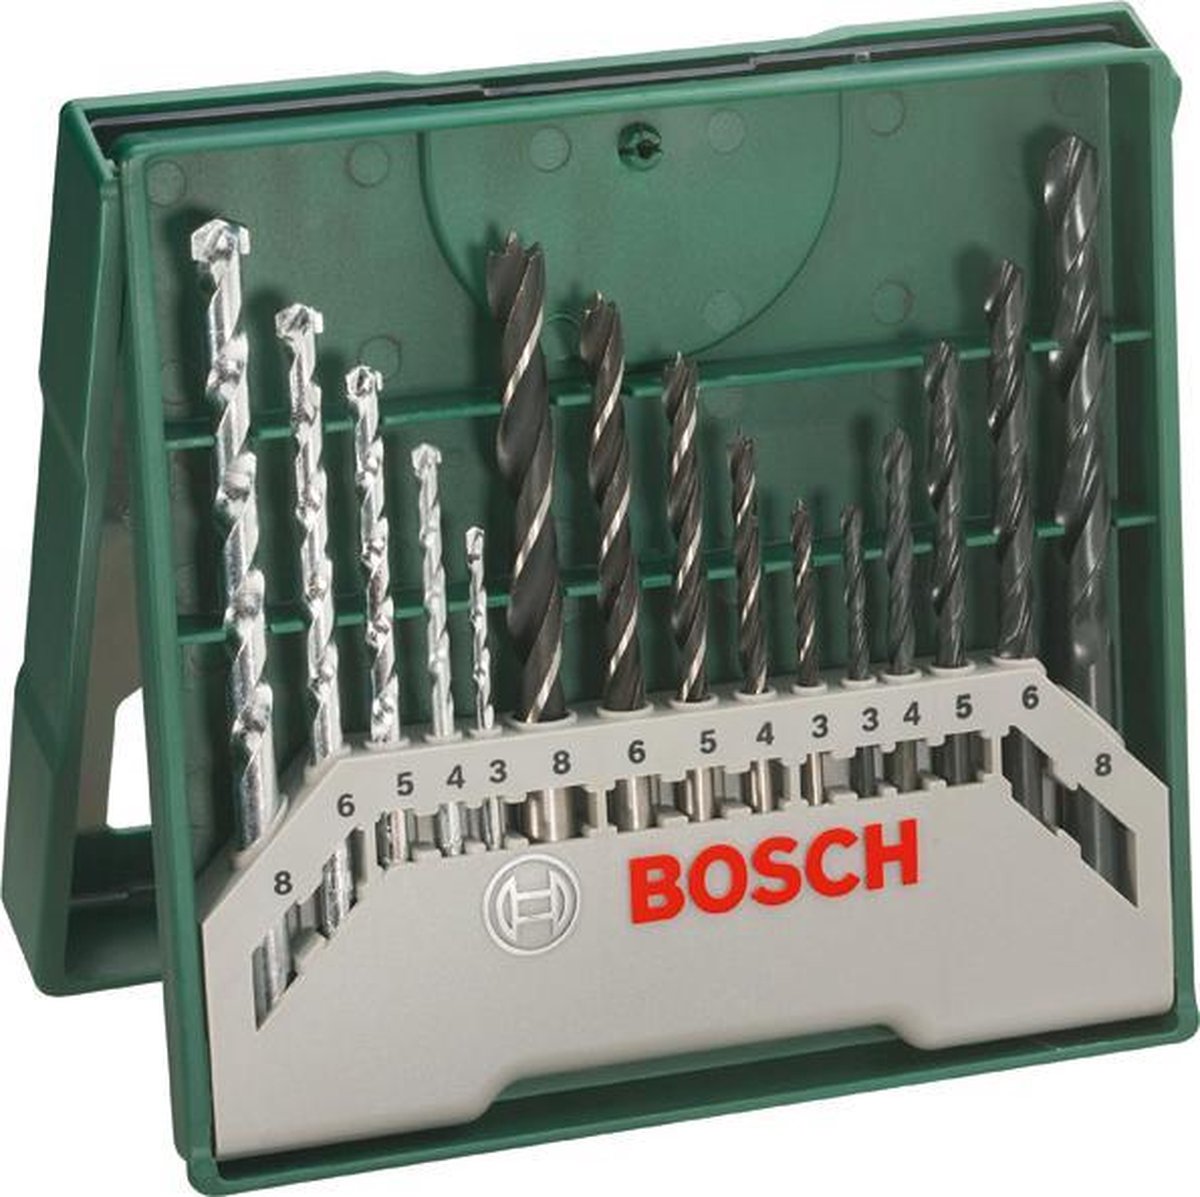 Bosch 15-delige Borenset